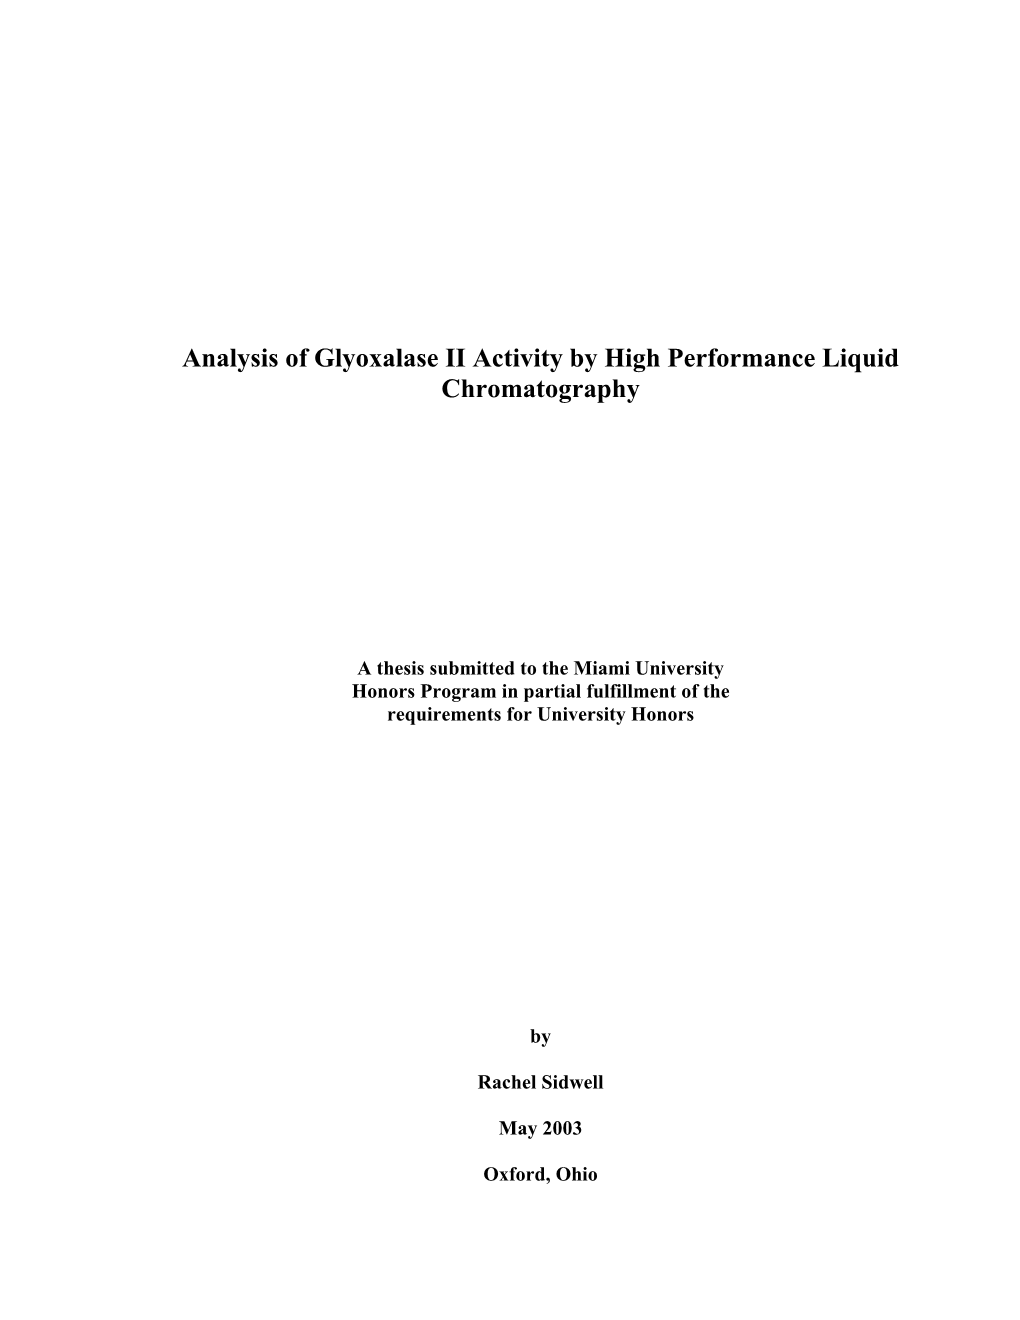 Analysis of Glyoxalase II Activity by High Performance Liquid Chromatography